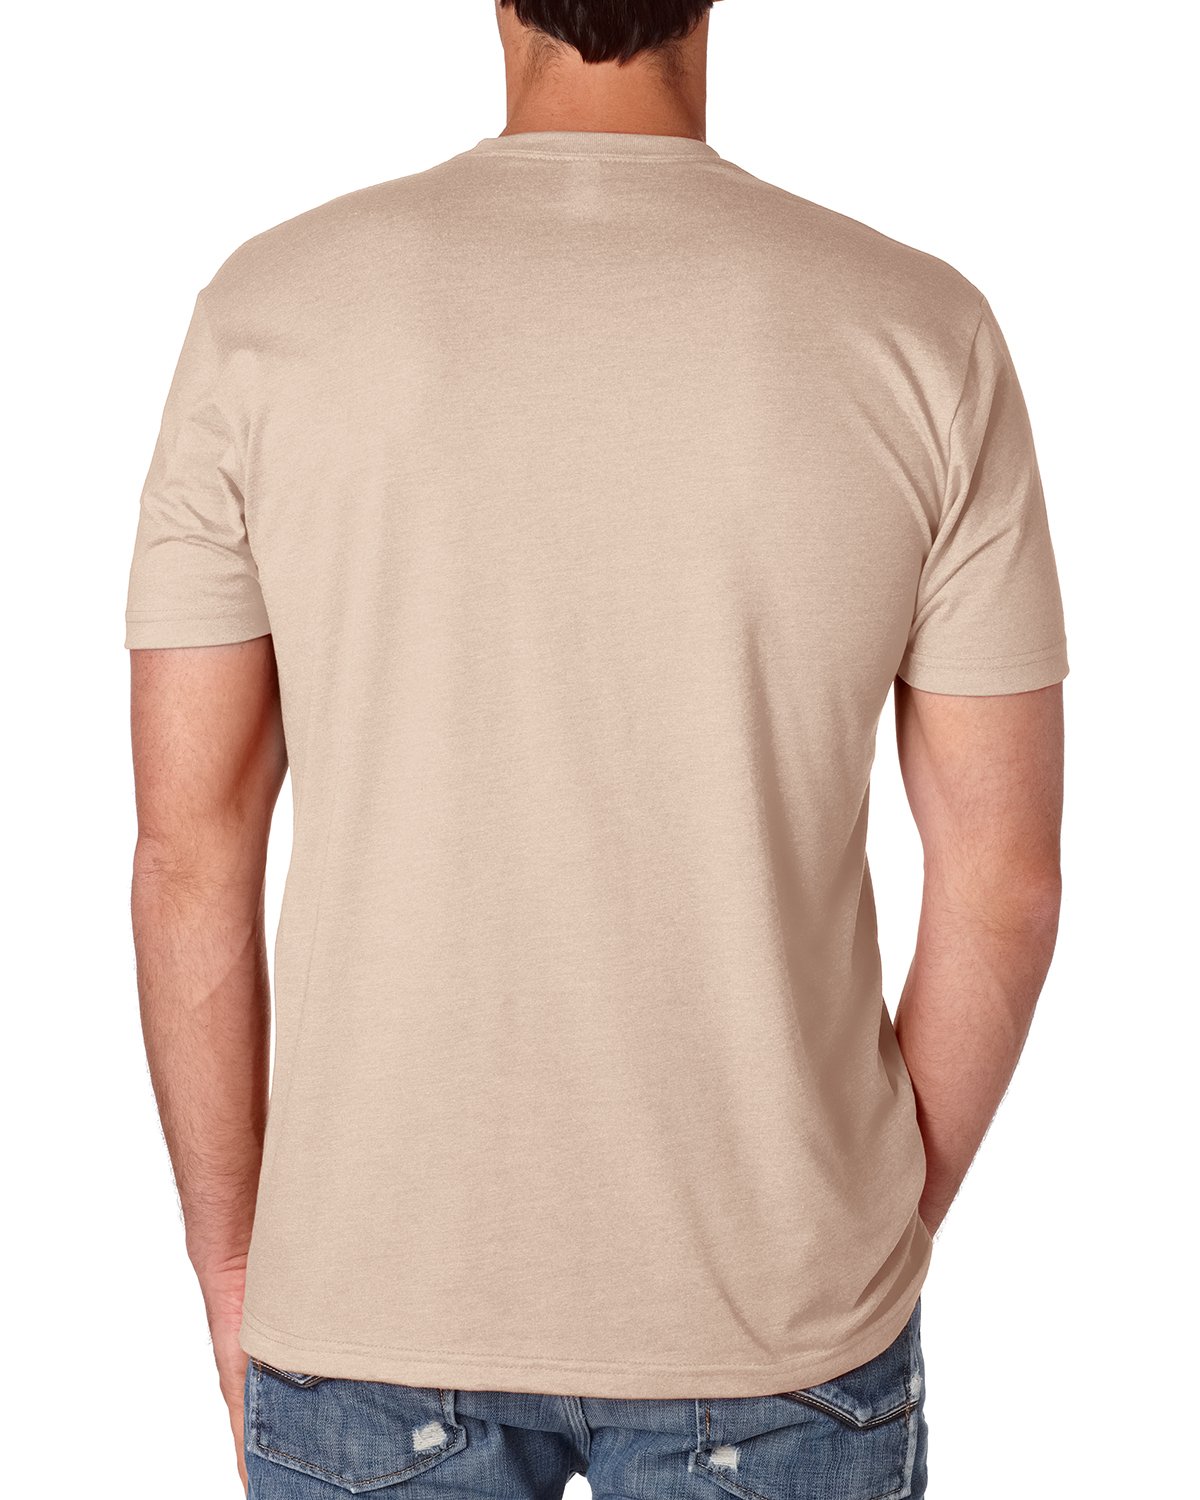 Next Level Apparel Men's Premium Fitted CVC T-Shirt (6210)